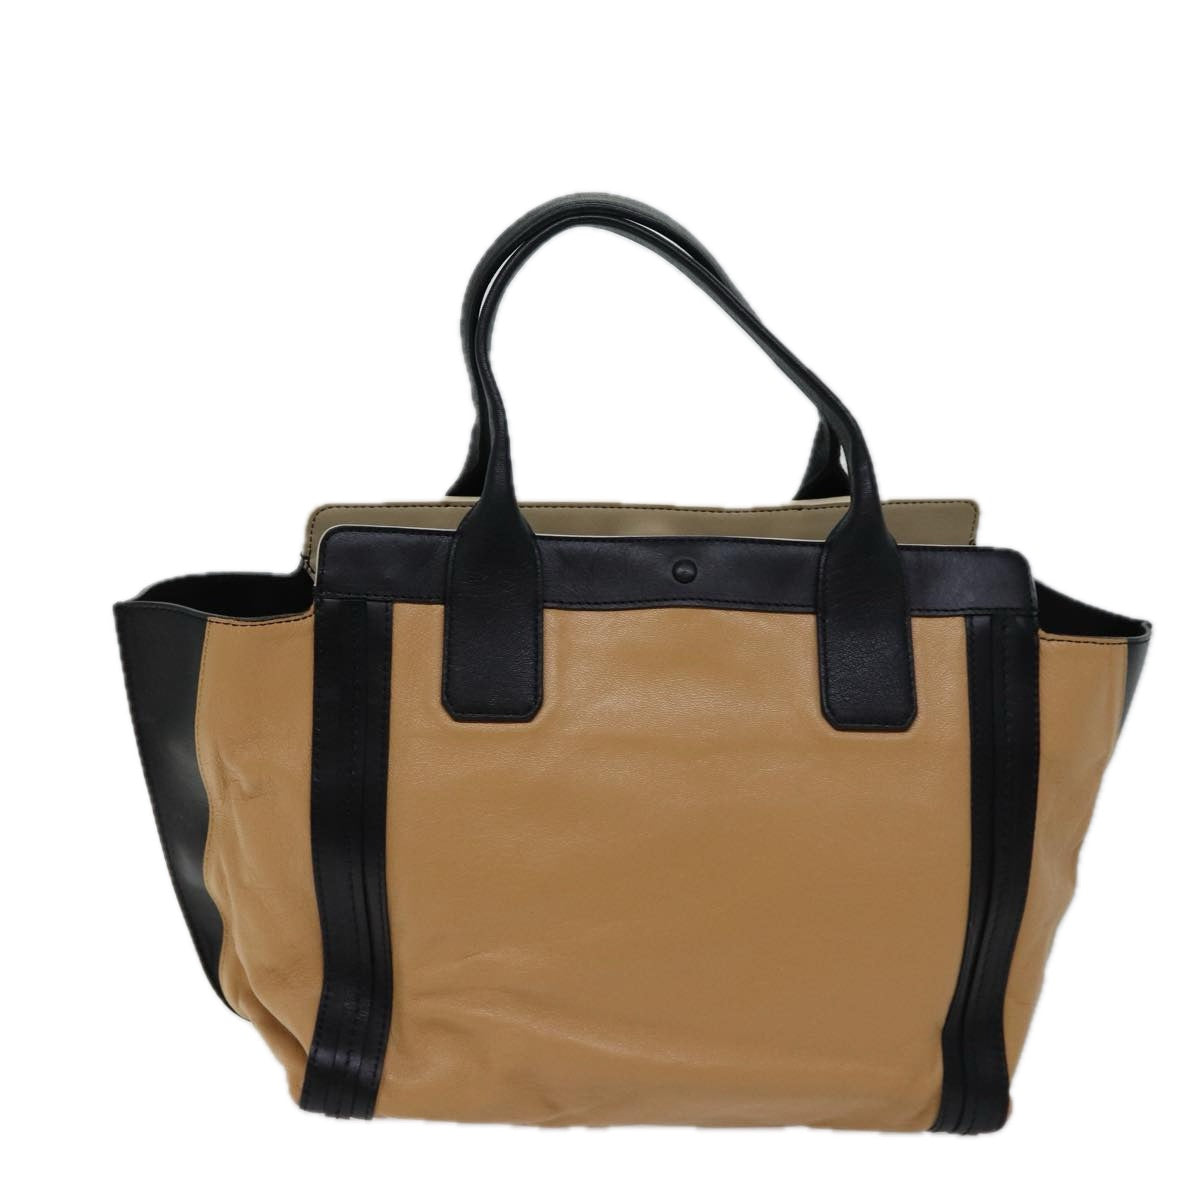 Chloe Hand Bag Leather Beige 01 14 50 65 Auth yk11323 - 0